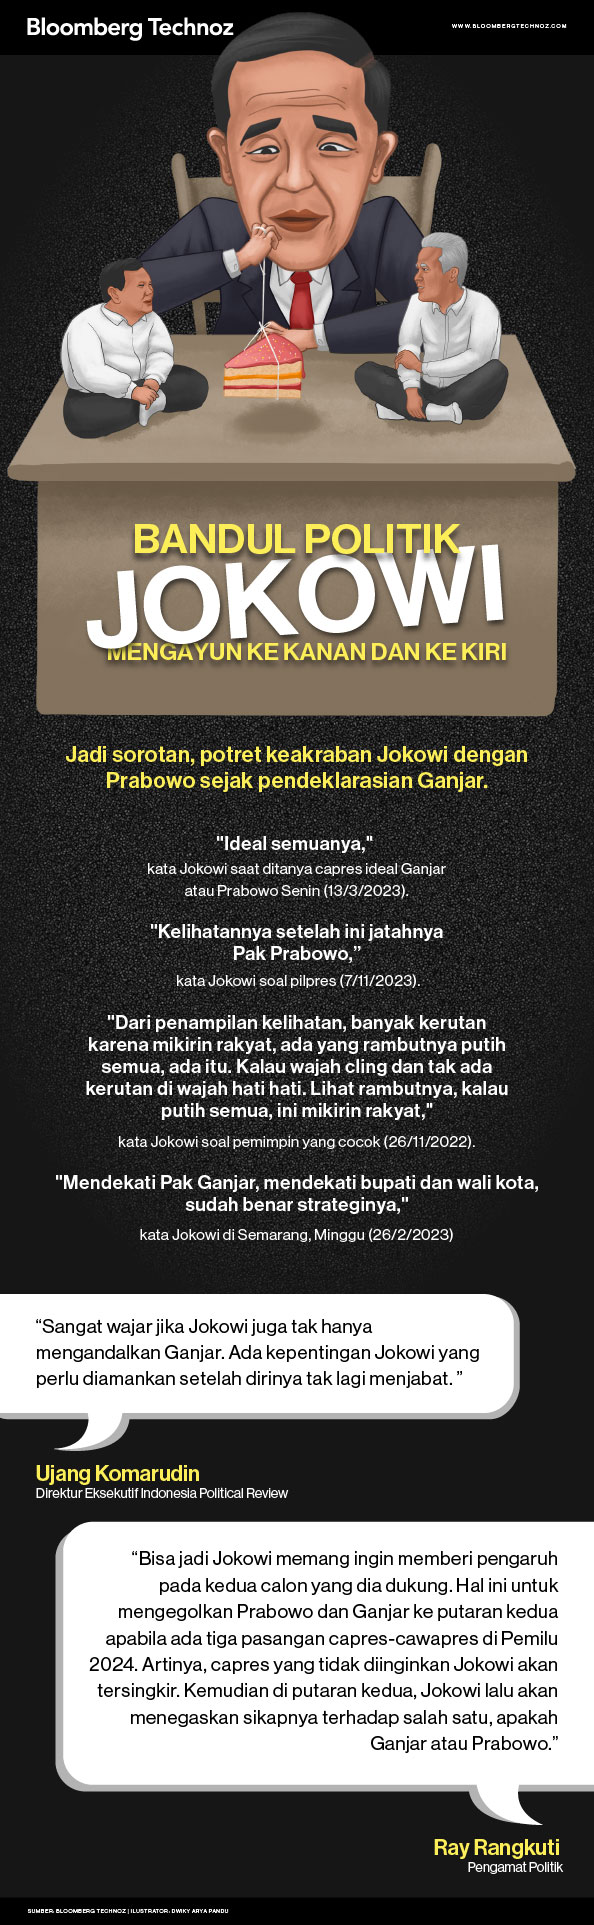 Bandul Politik Jokowi Mengayun ke Kanan dan ke Kiri (Infografis/Bloomberg Technoz)